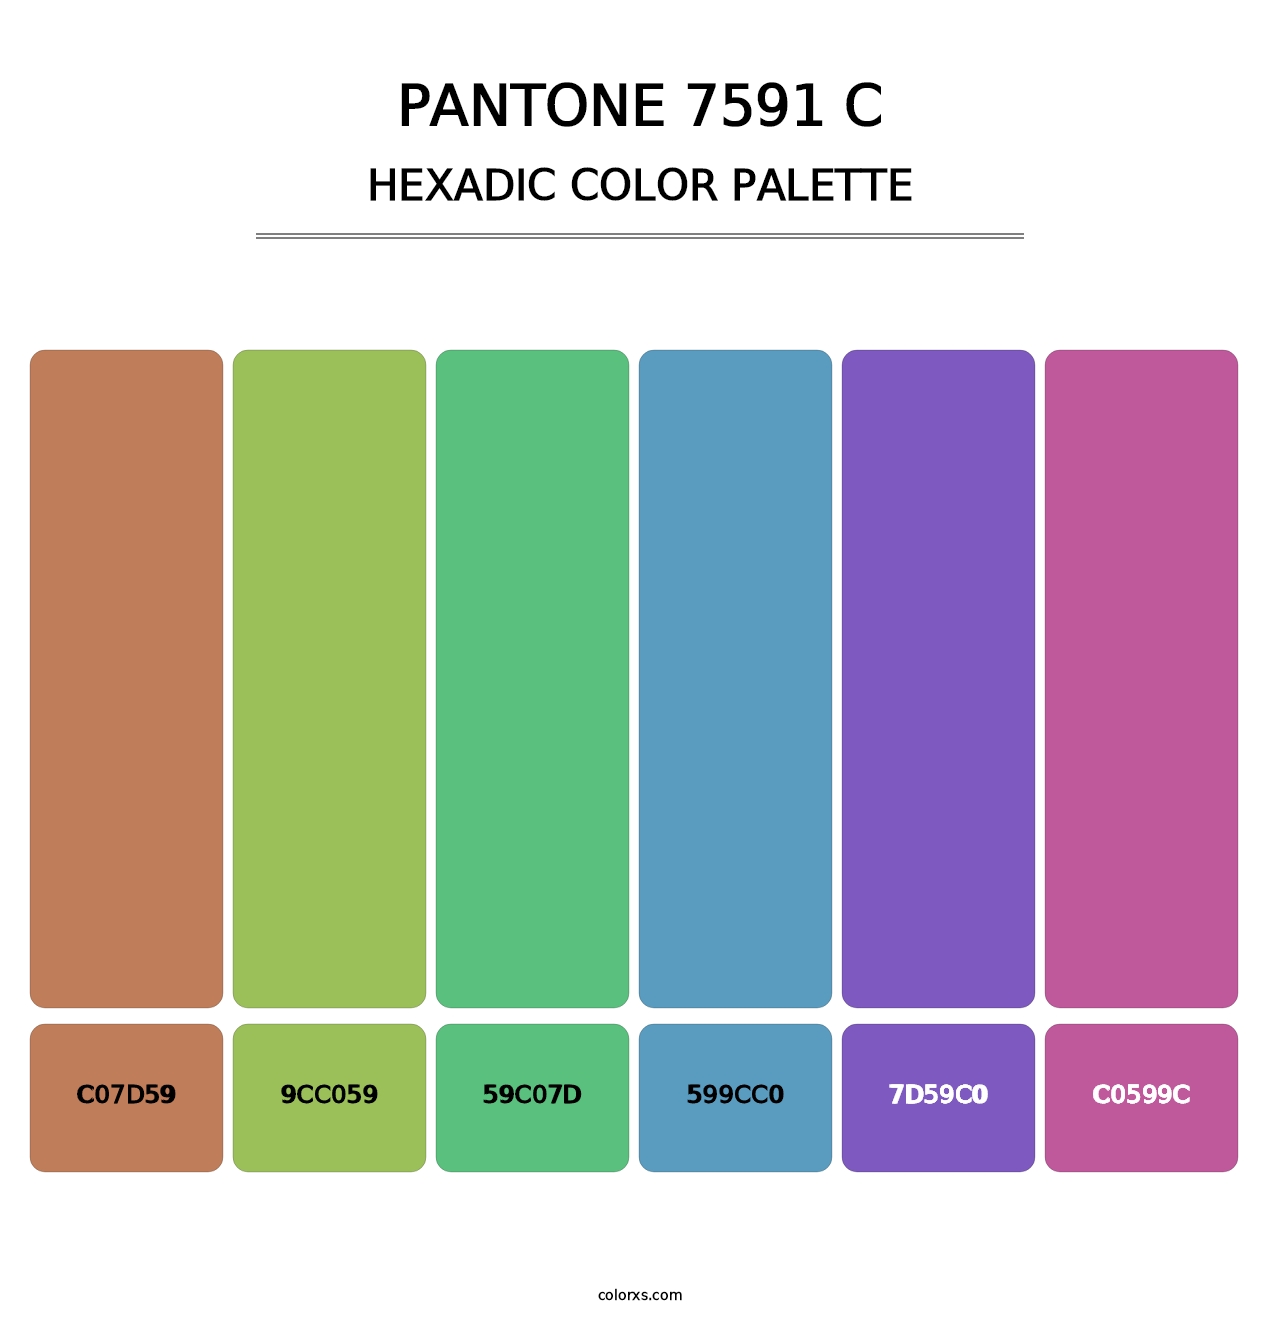 PANTONE 7591 C - Hexadic Color Palette